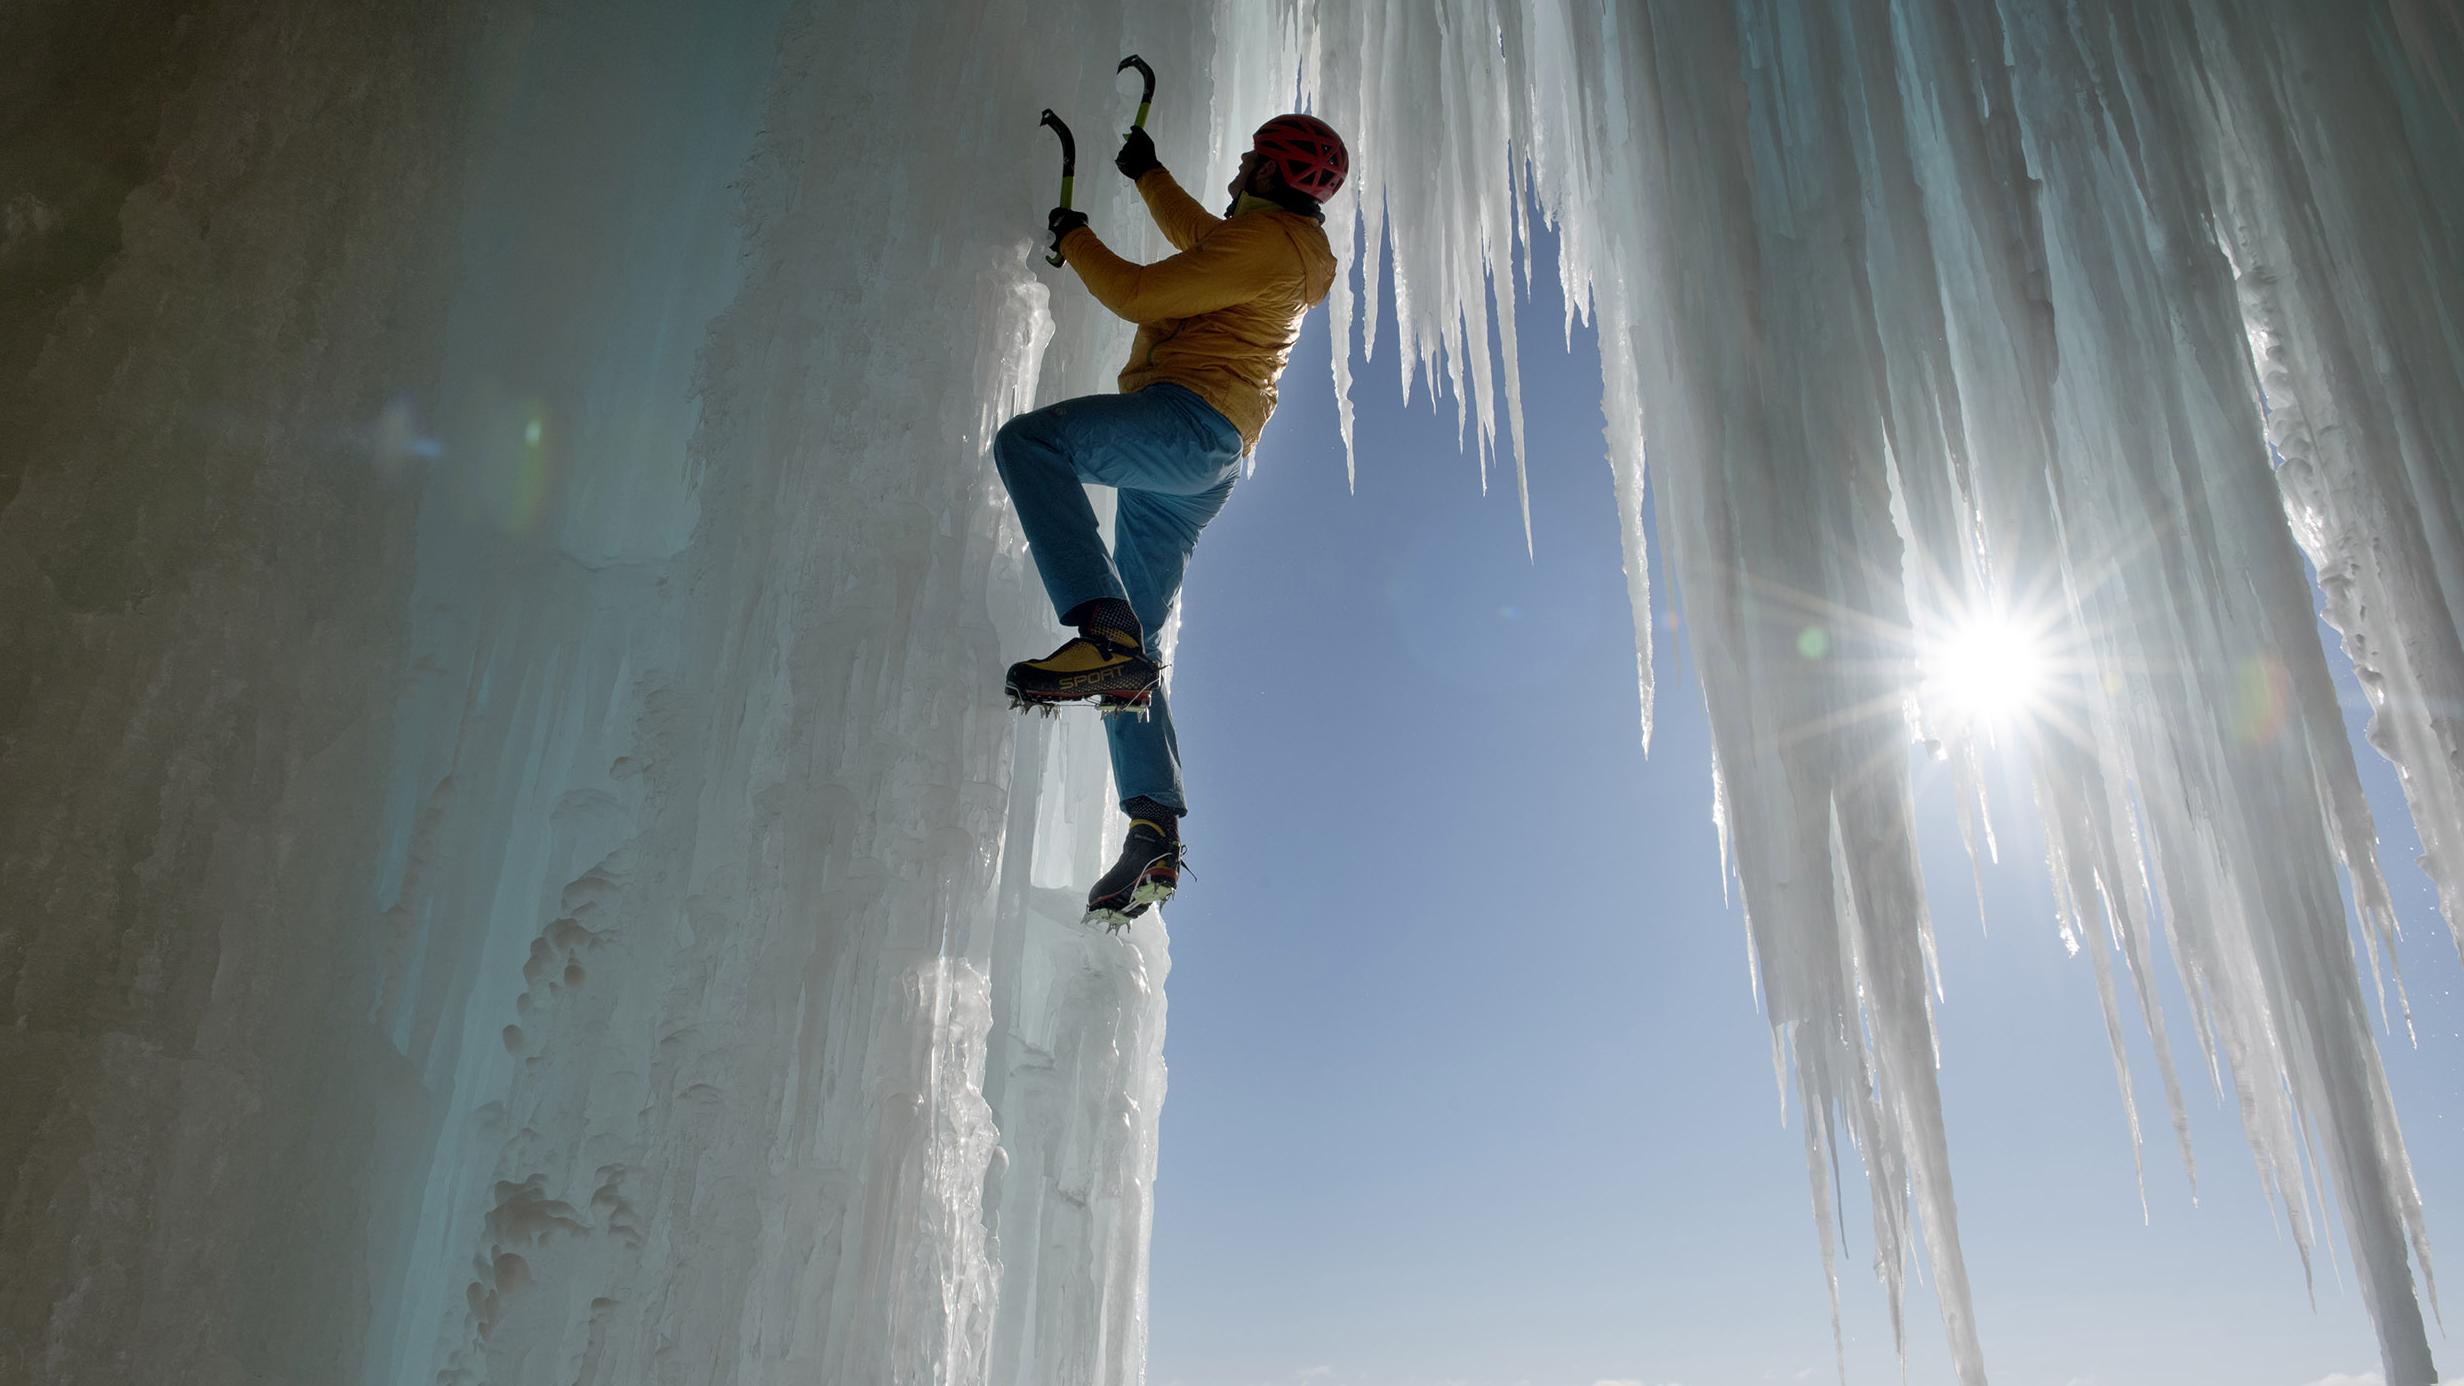 Ice climber